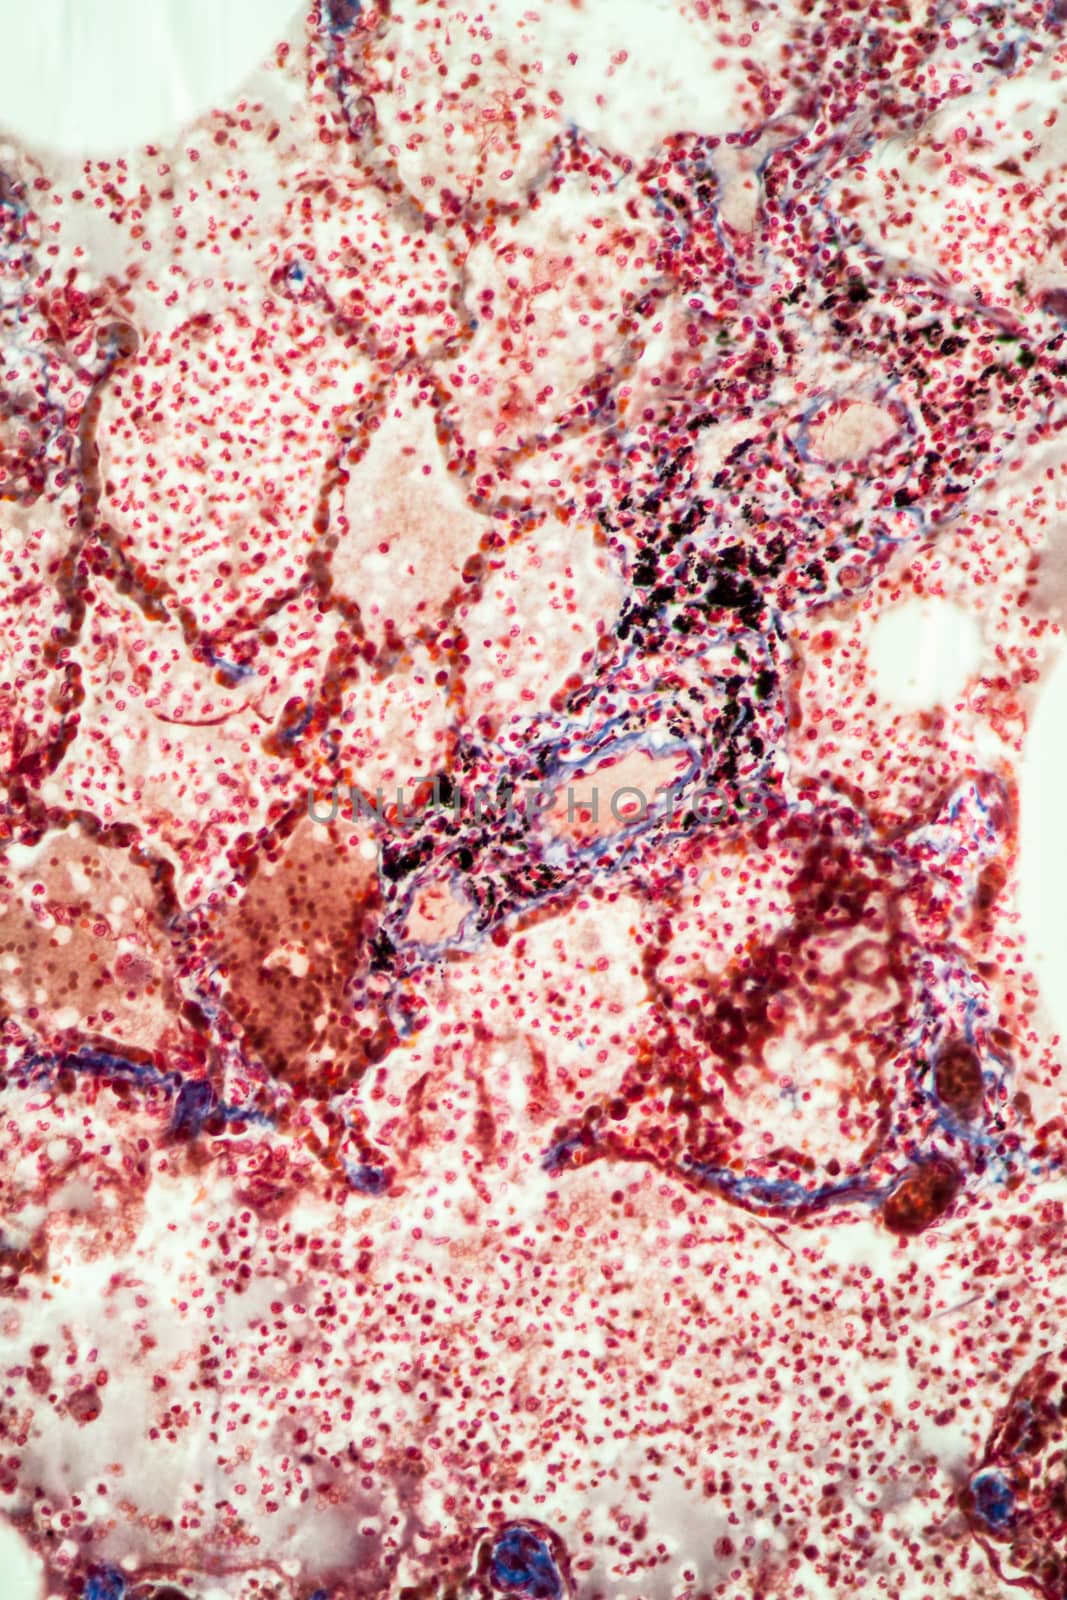 Tuberculosis tissue under the microscope 100x